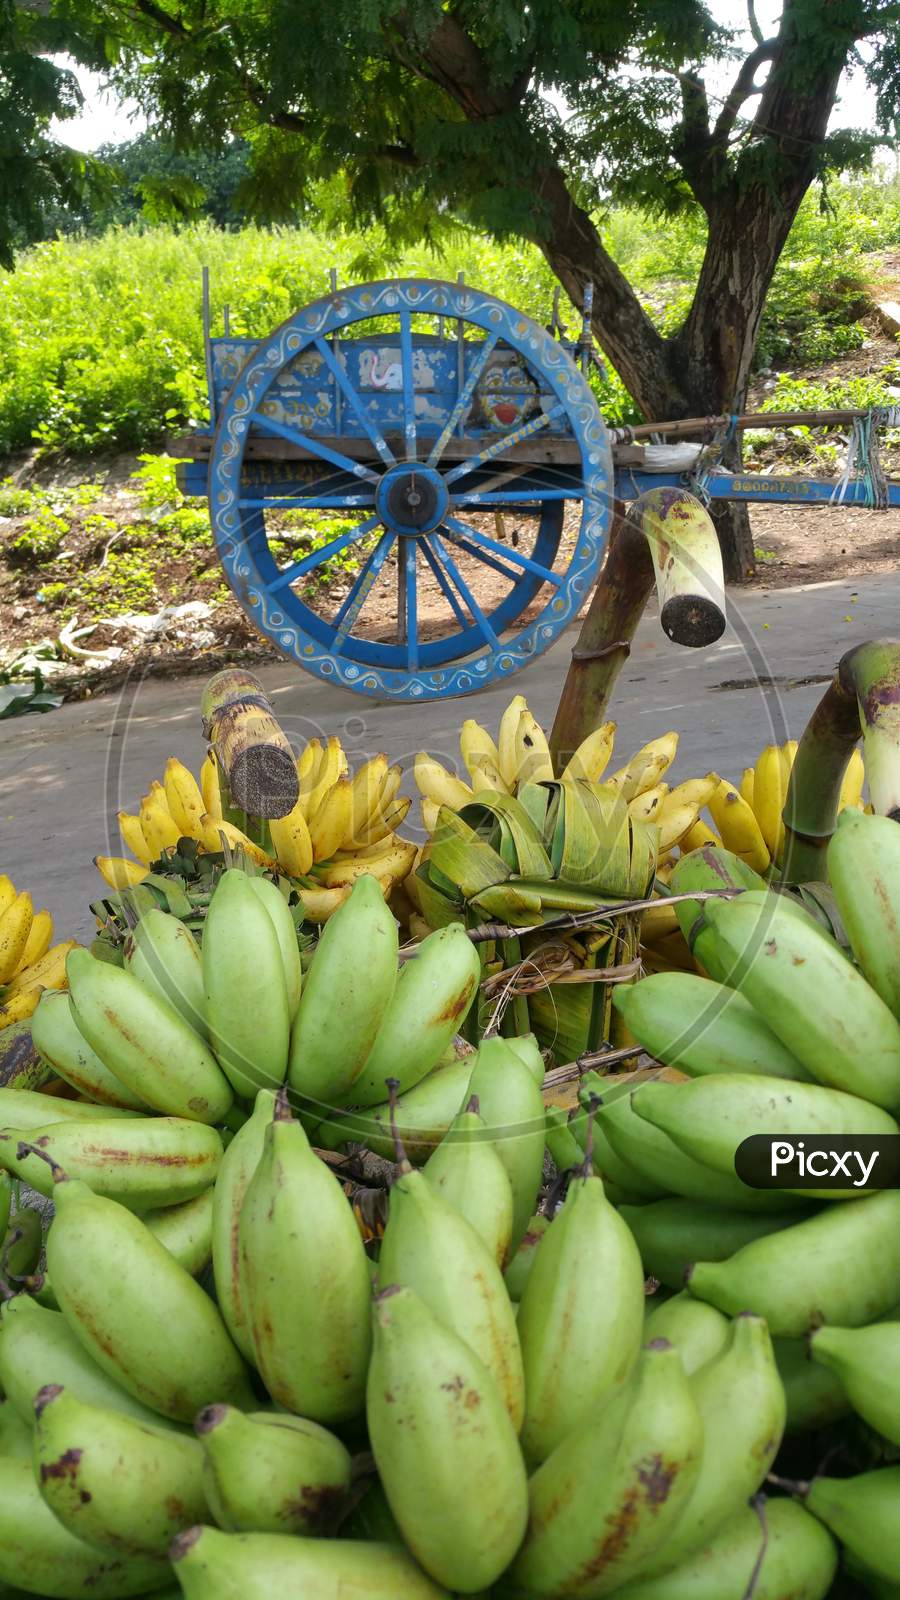 Banana market in rural India